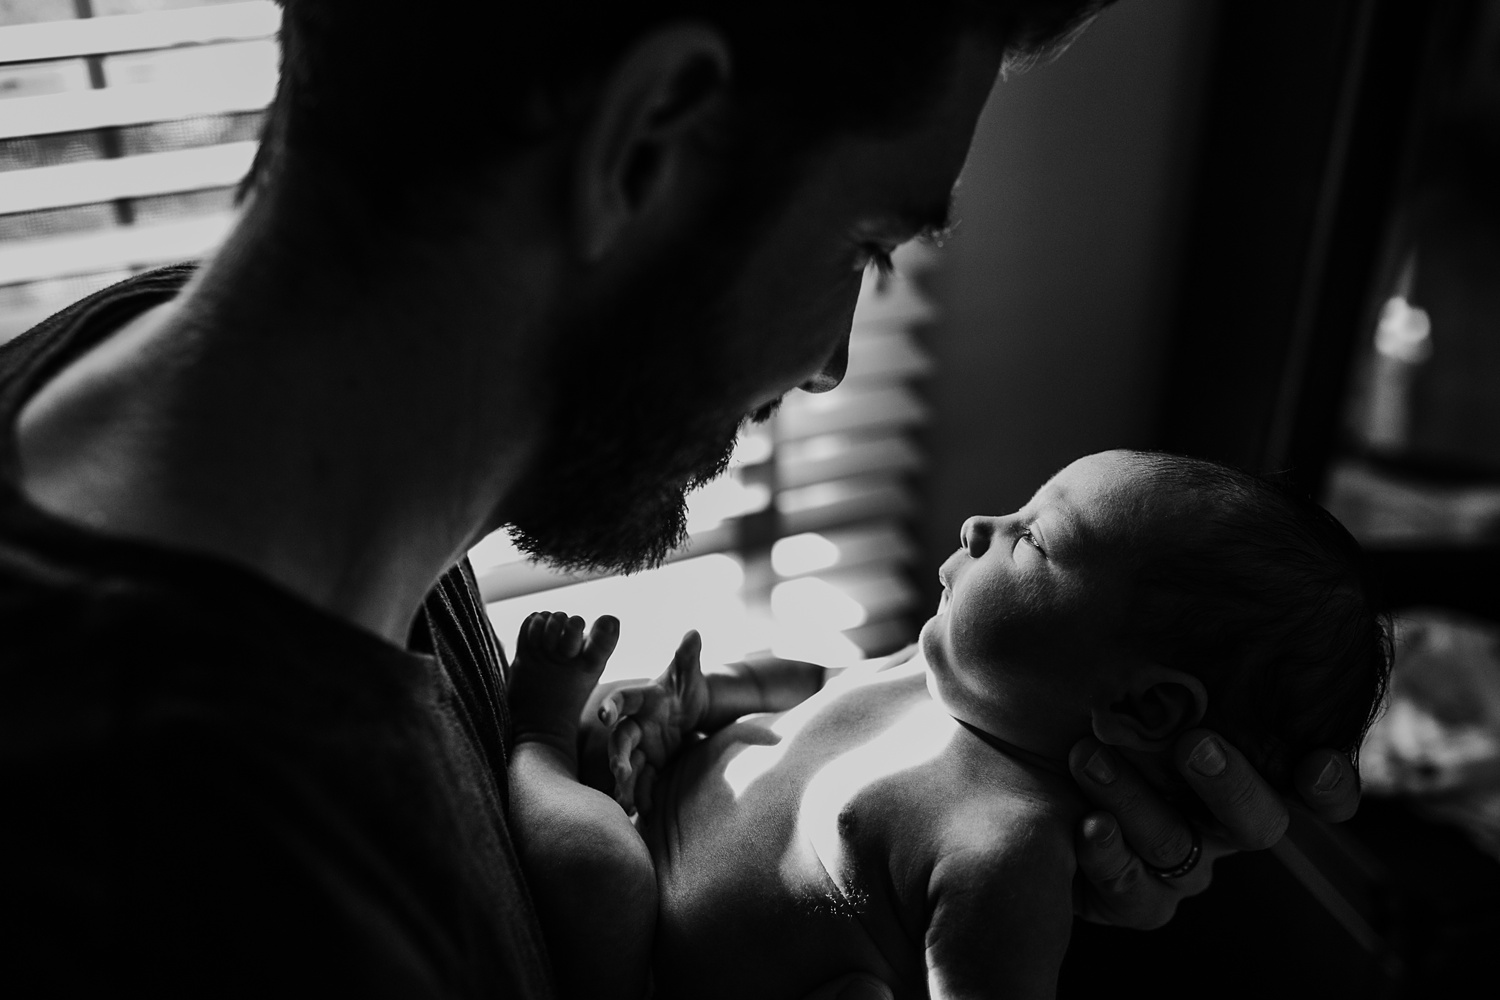 dc and cumberland newborn photography